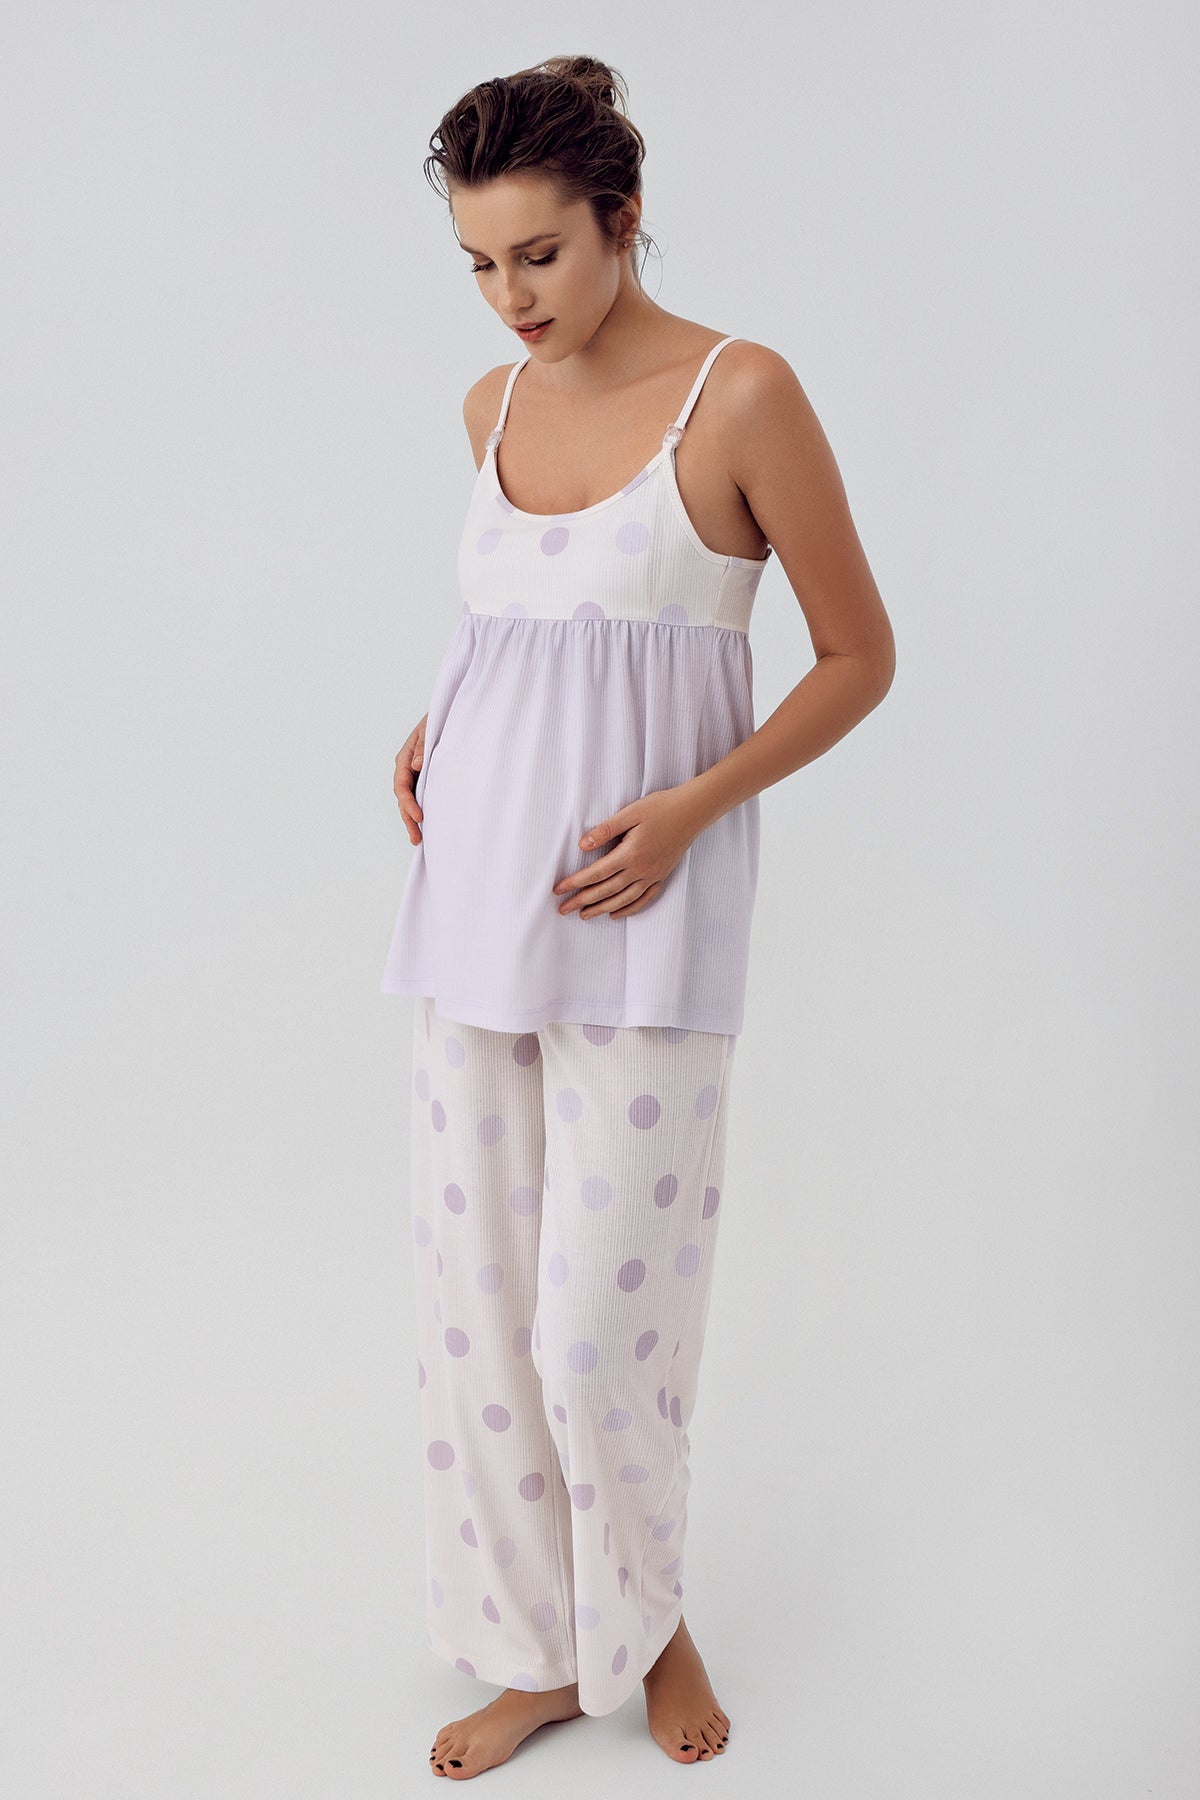 Shopymommy 16201 Polka Dot Strap Maternity & Nursing Pajamas Lilac